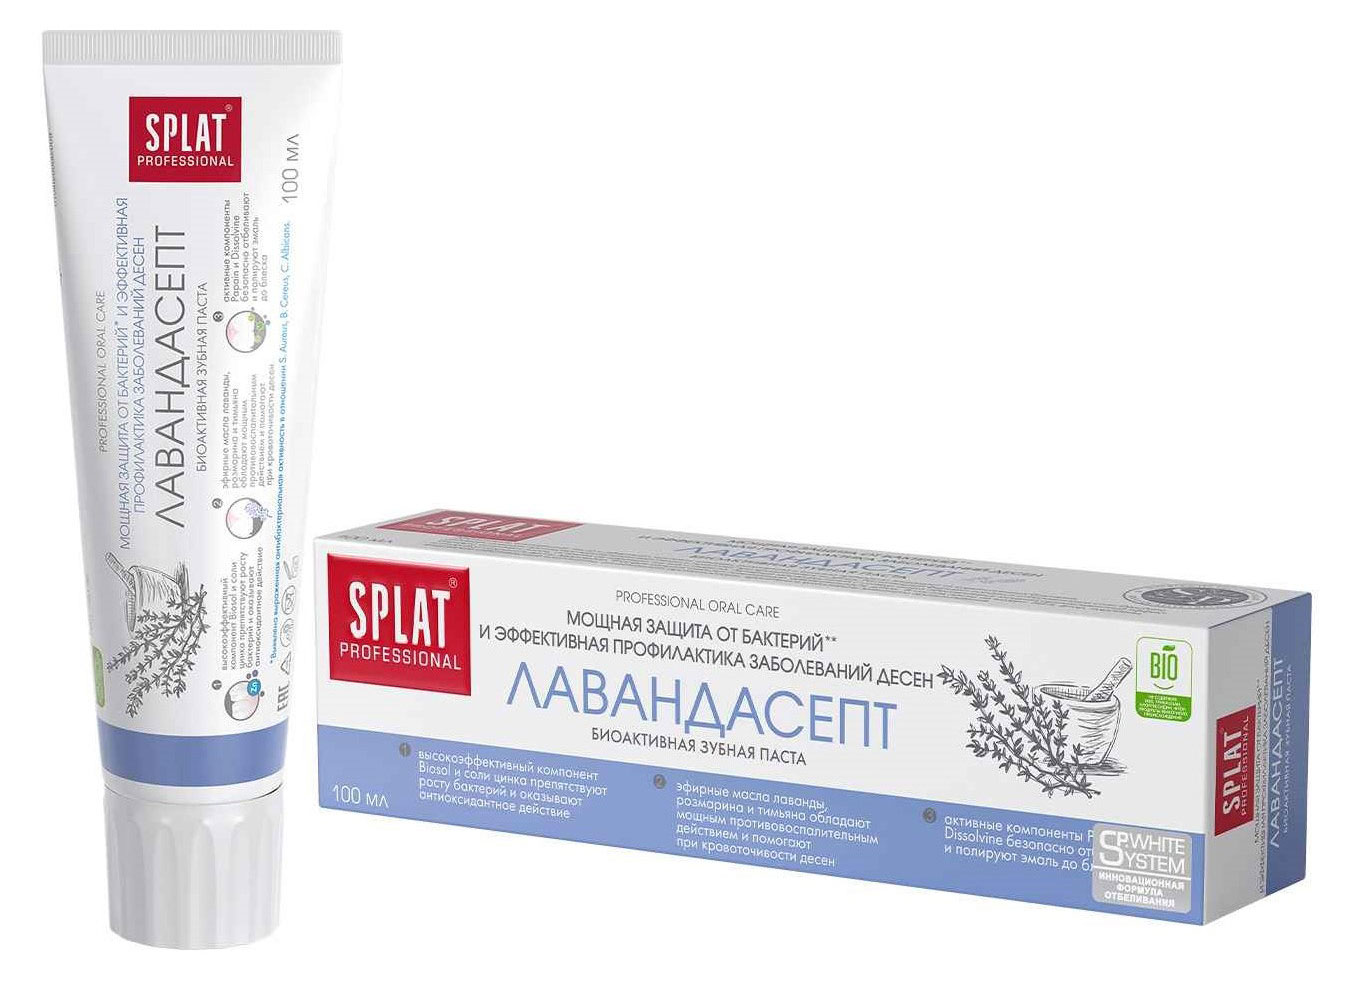 Splat | Зубная паста Splat Professional Лавандасепт биоактивная, 100 мл